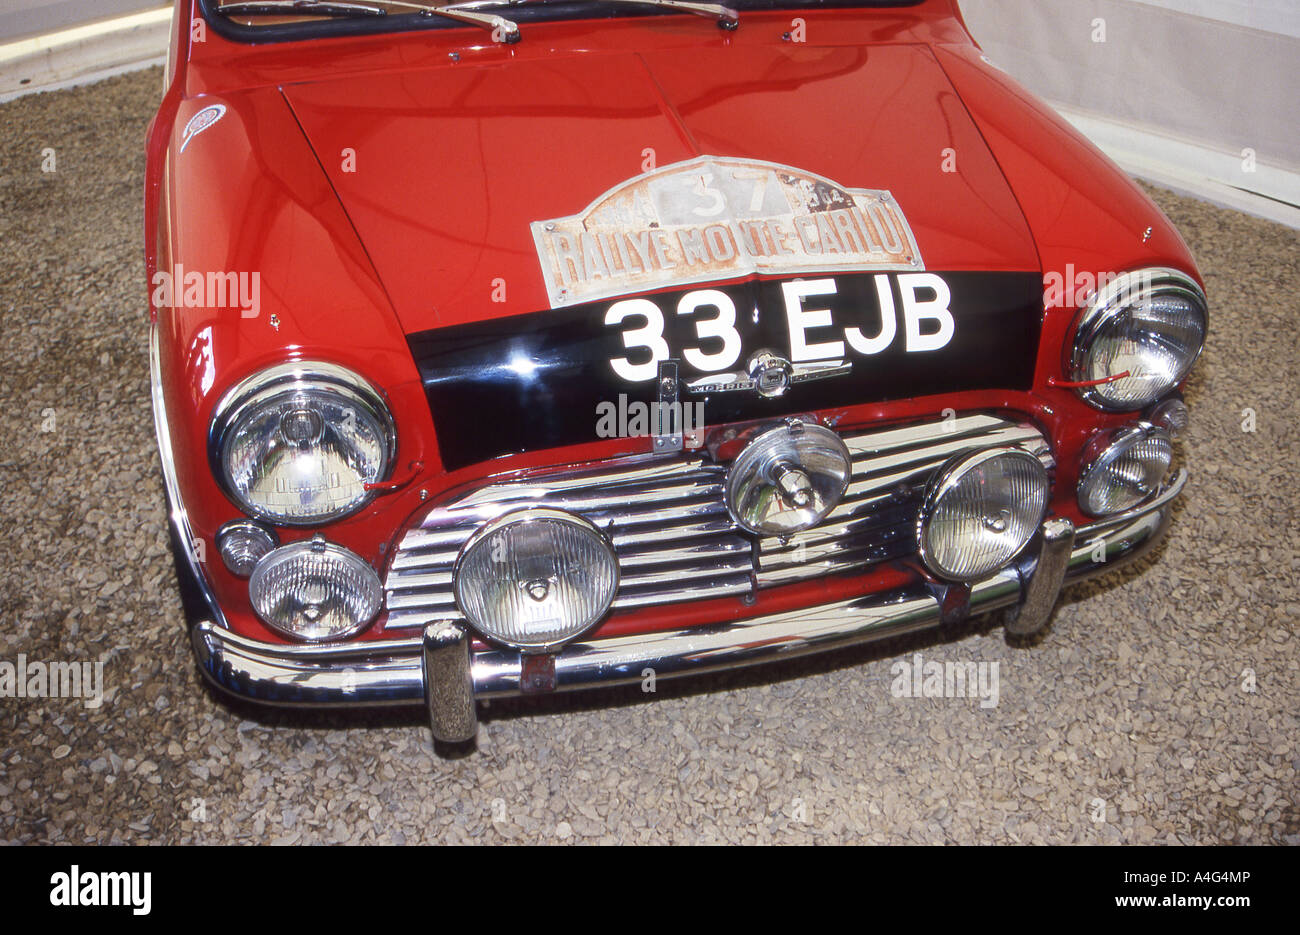 33EJB, the famous Morris Mini Cooper winner of the 1964 Monte Carlo Rally. Stock Photo